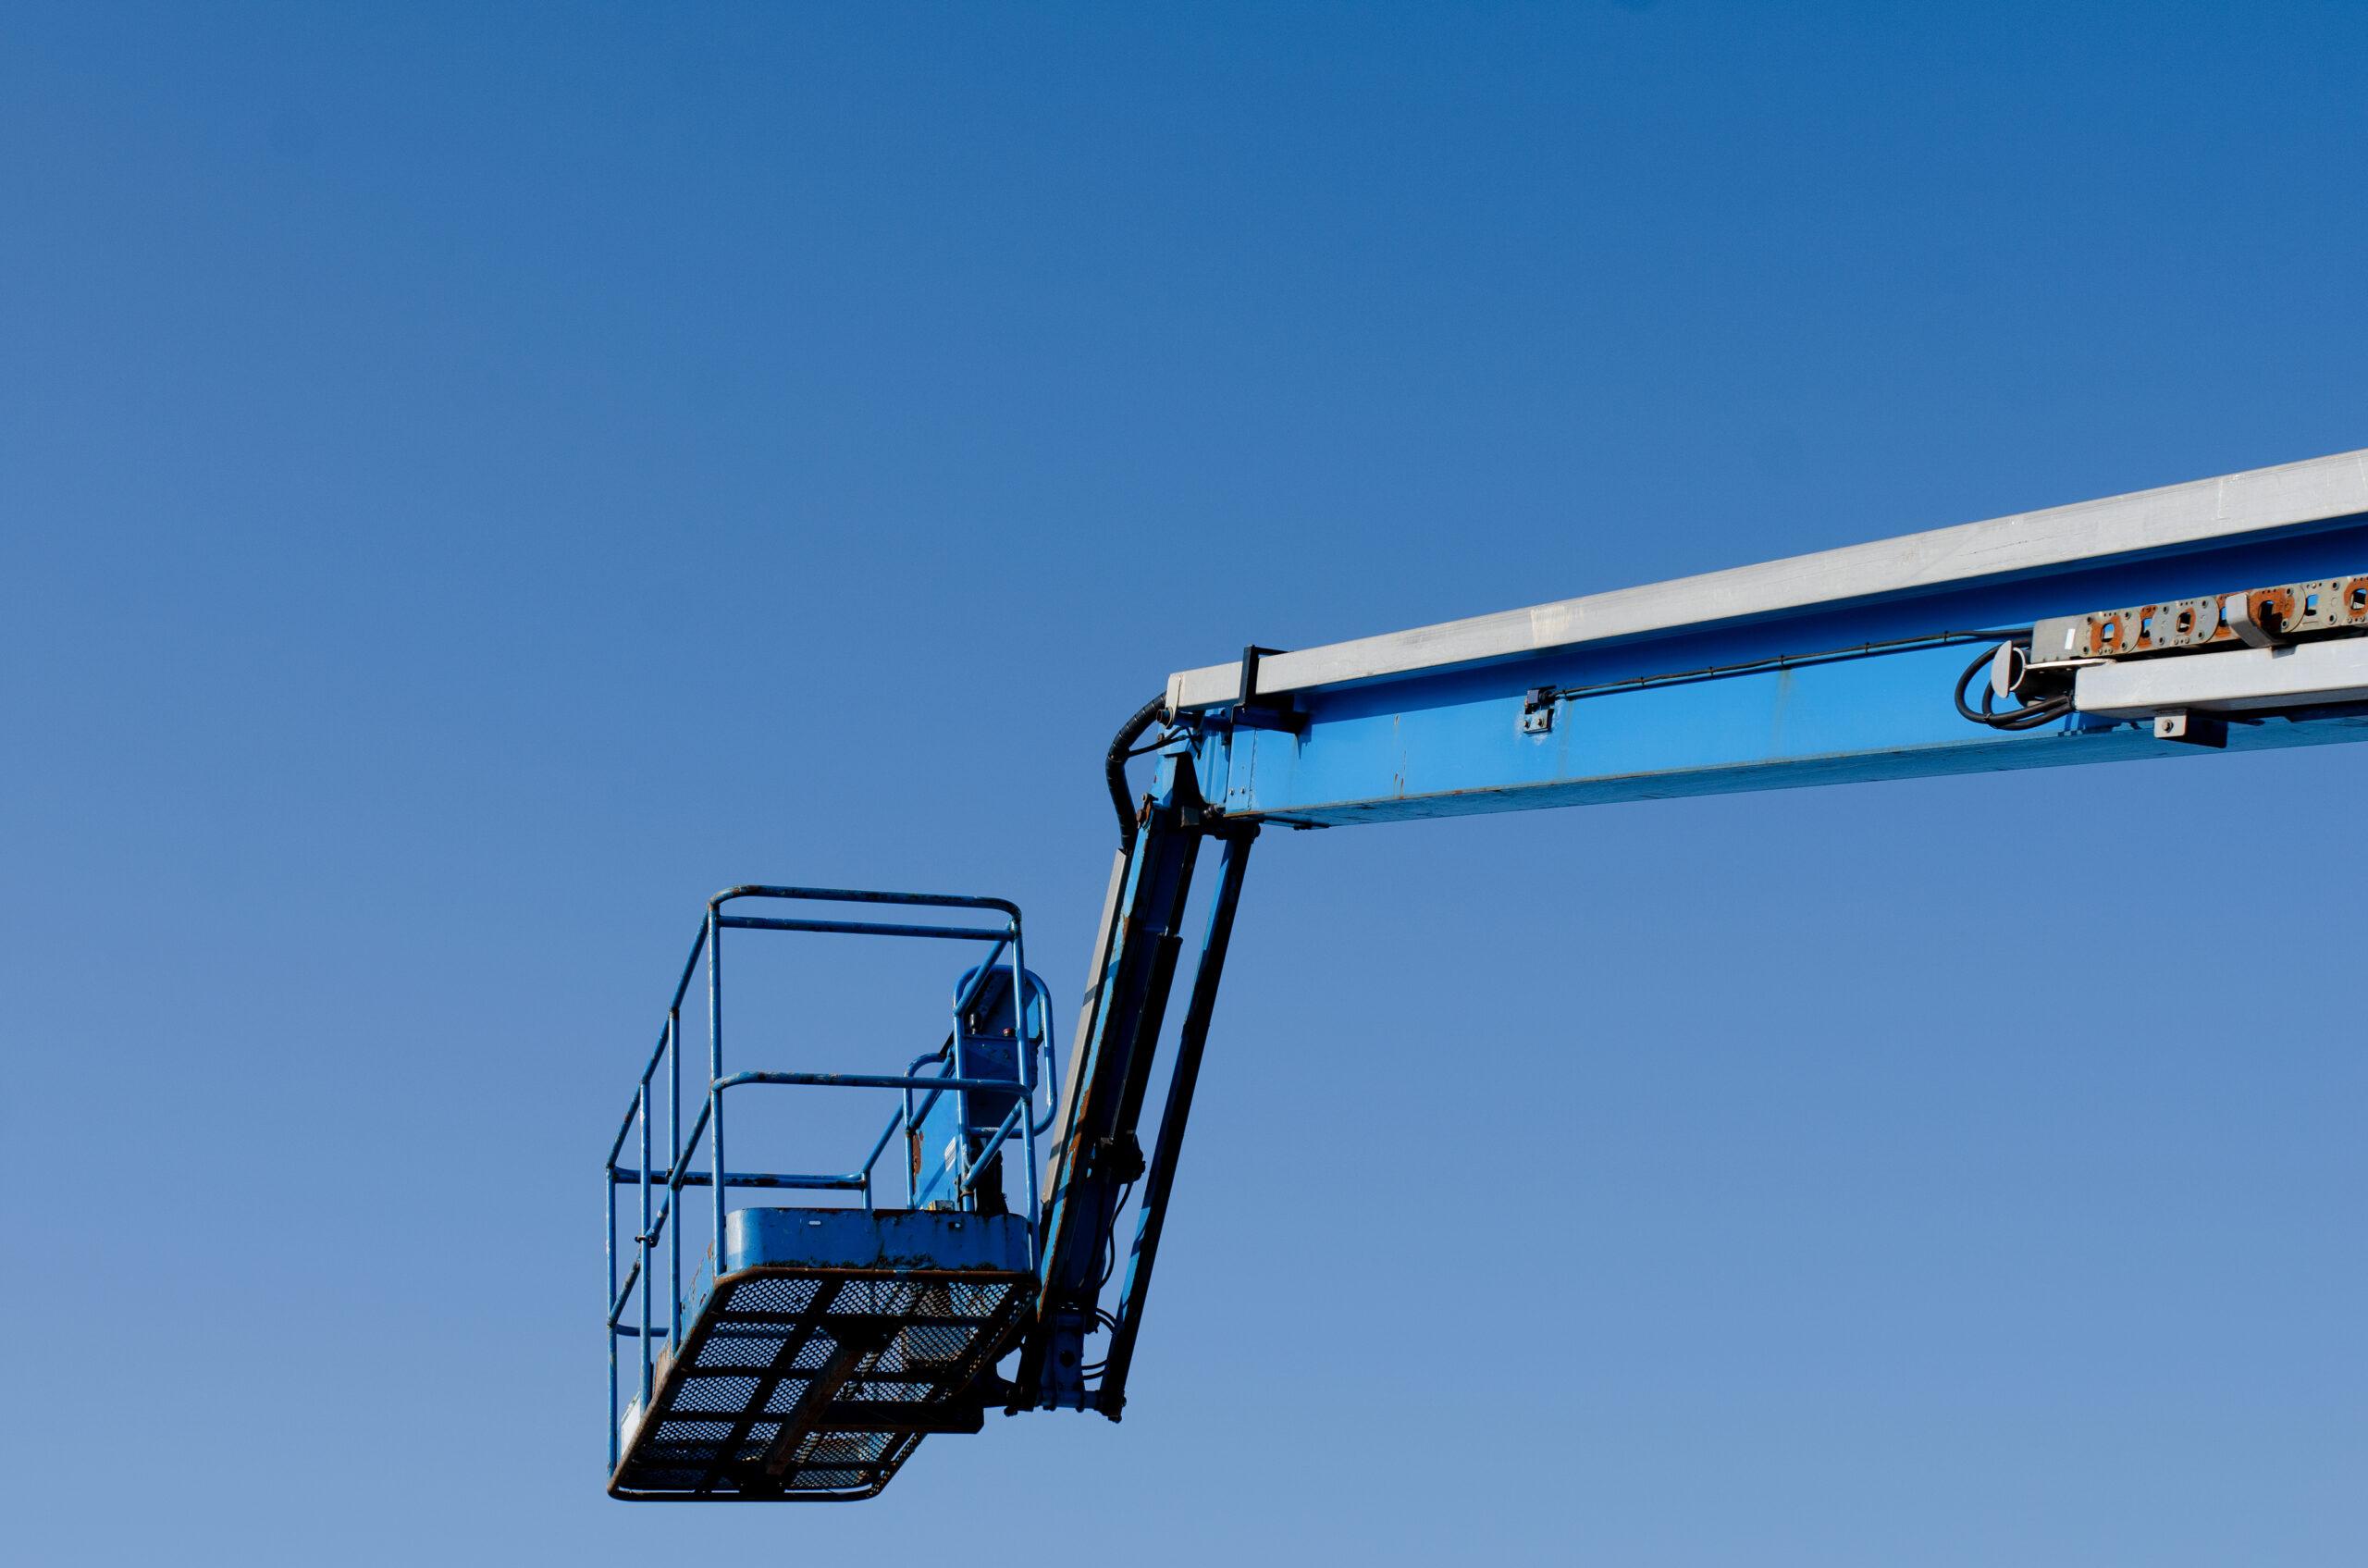 Sky blue area work platform lift in the sky.